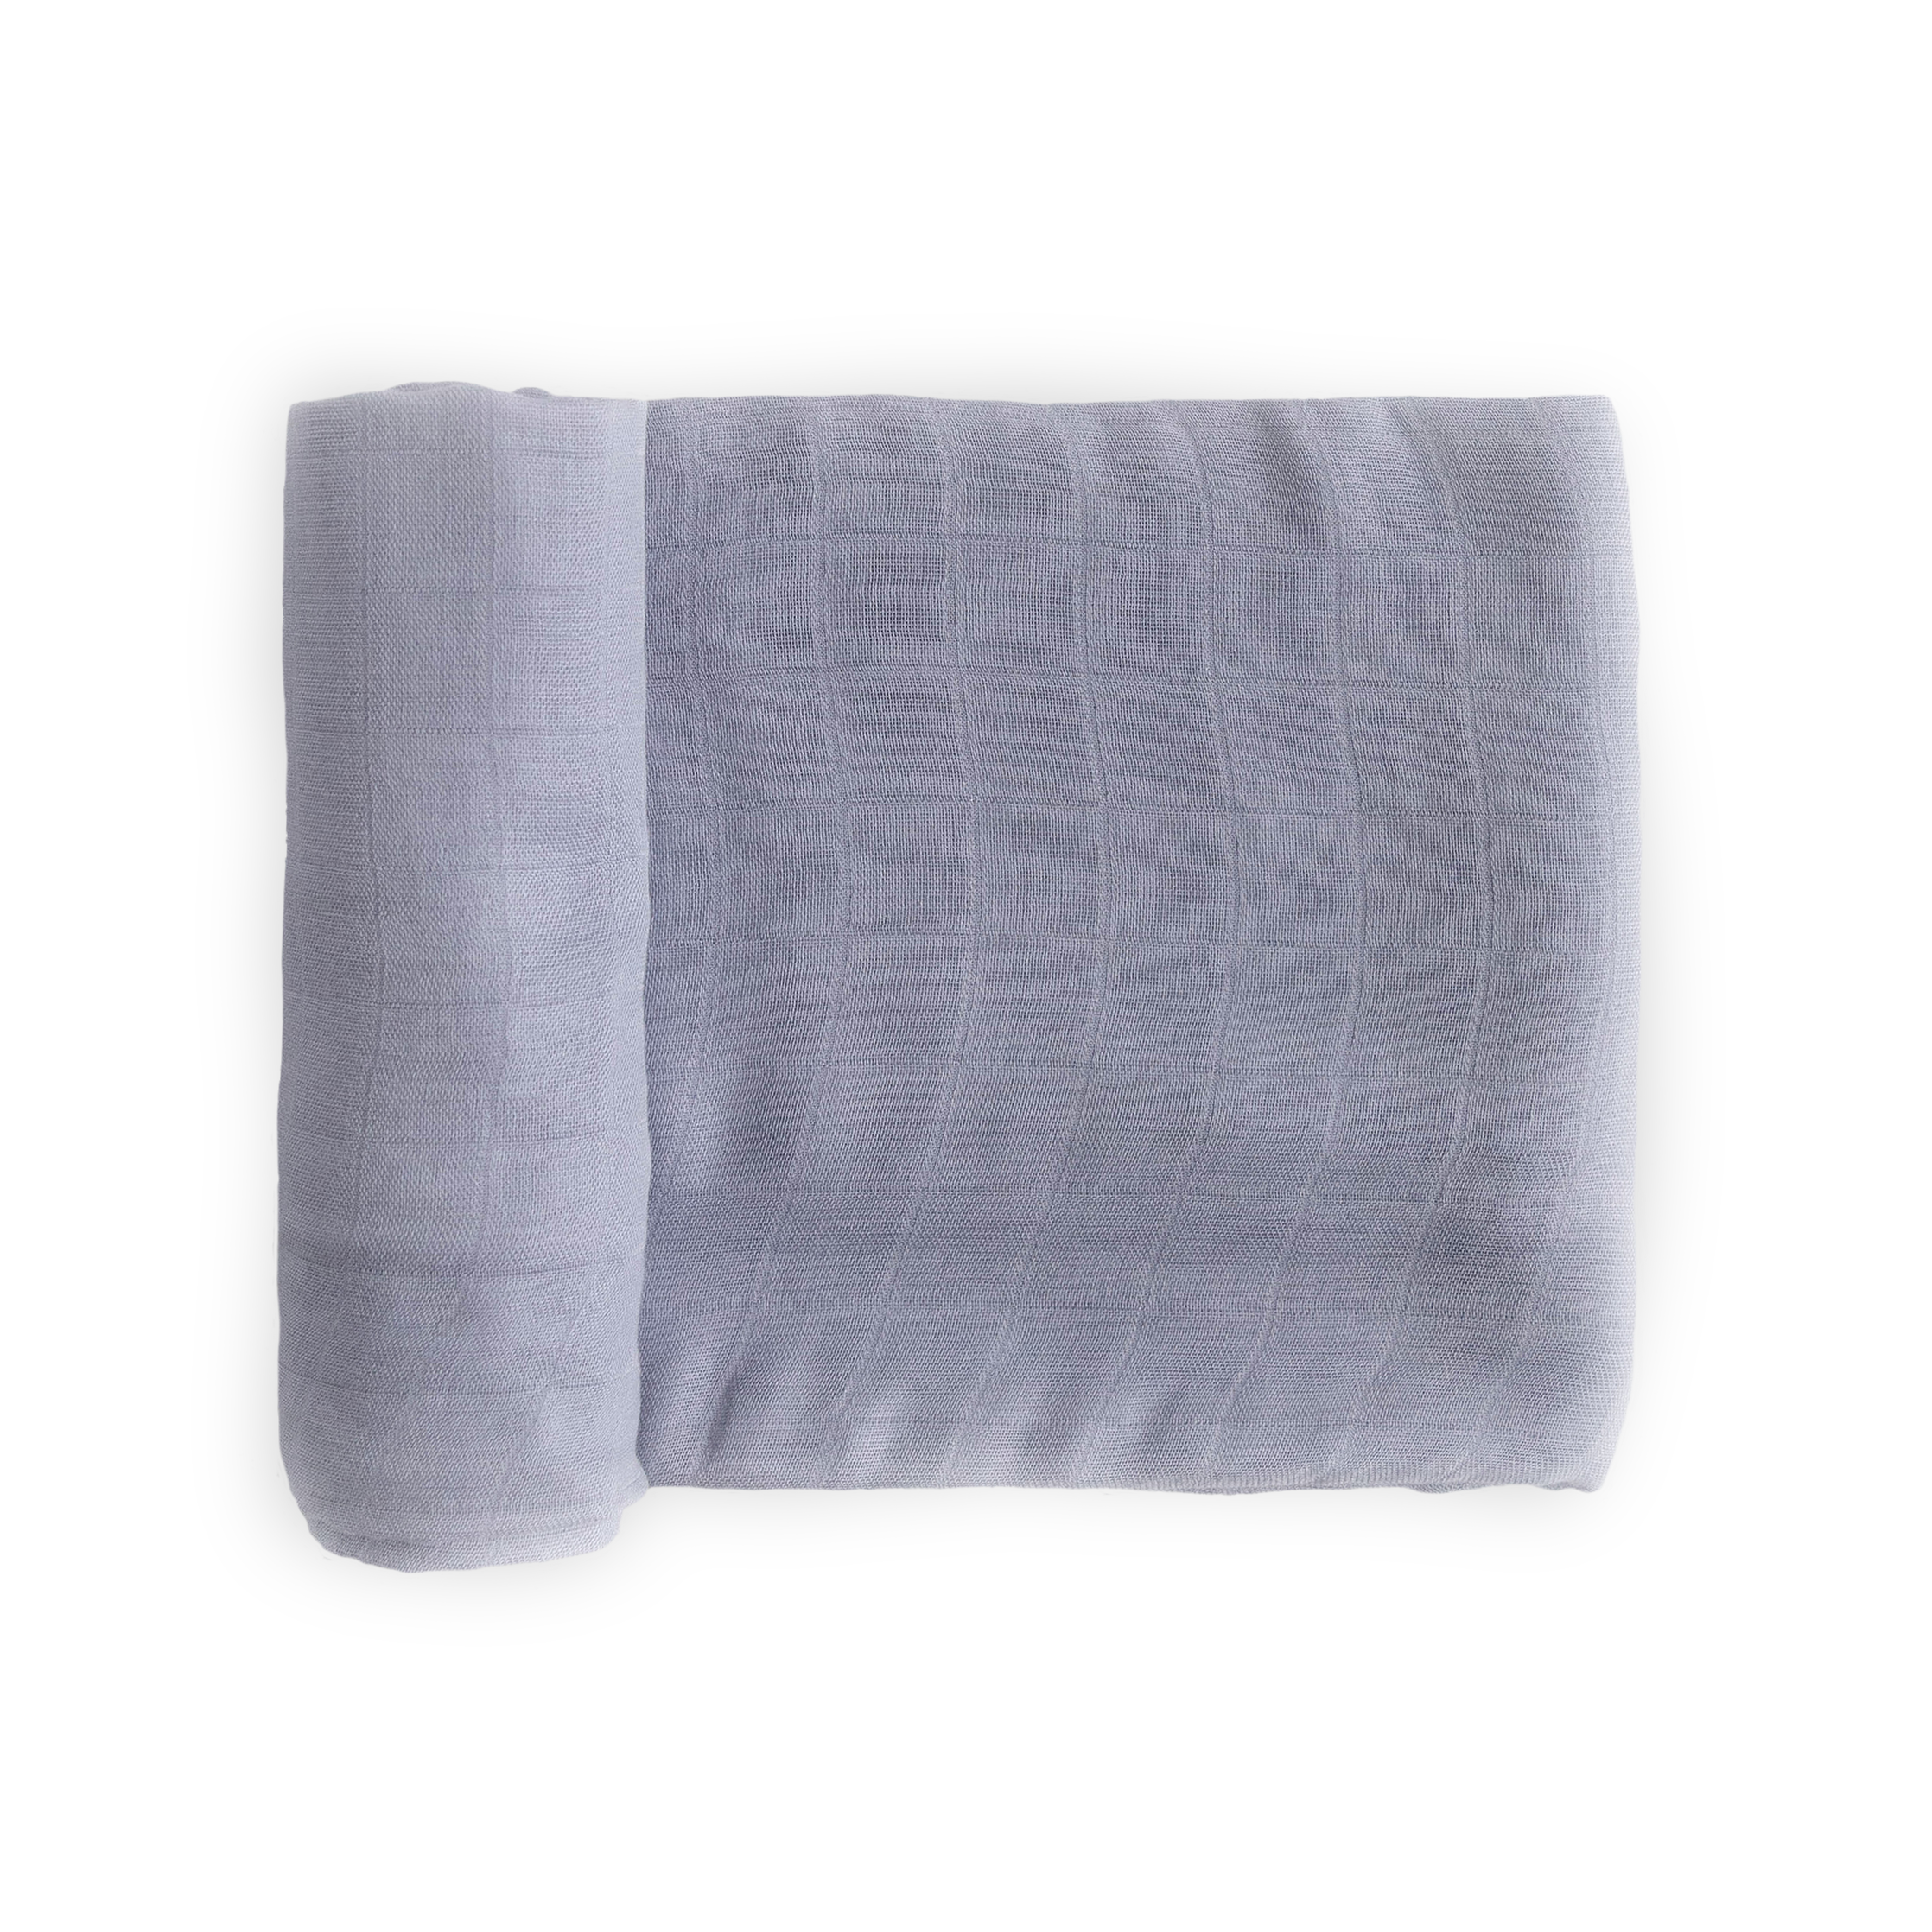 Deluxe Muslin Swaddle Blanket - Lavender